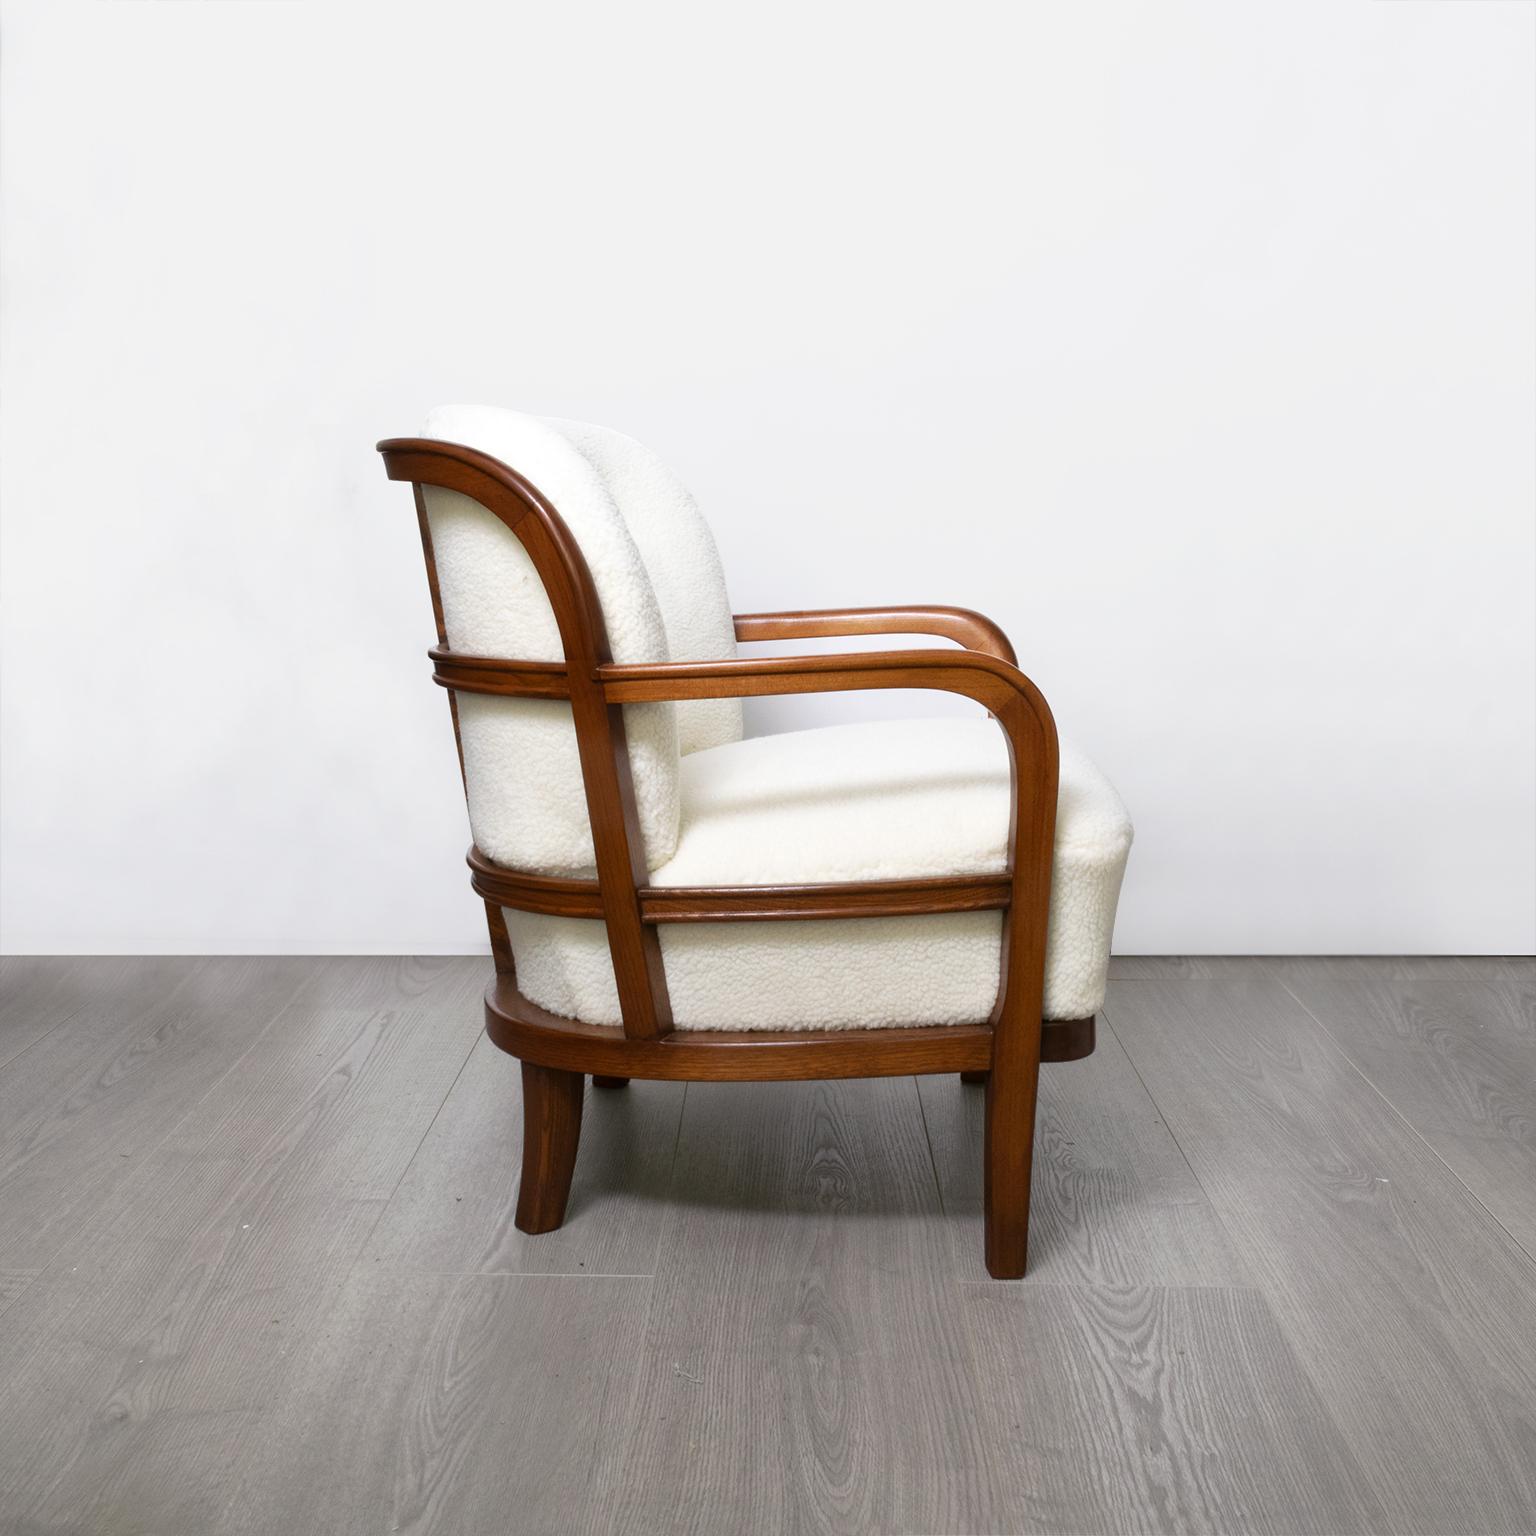 20th Century Pair of Scandinavian Modern Lounge Chairs by Carl-Johan Boman, Boman OY, Finland